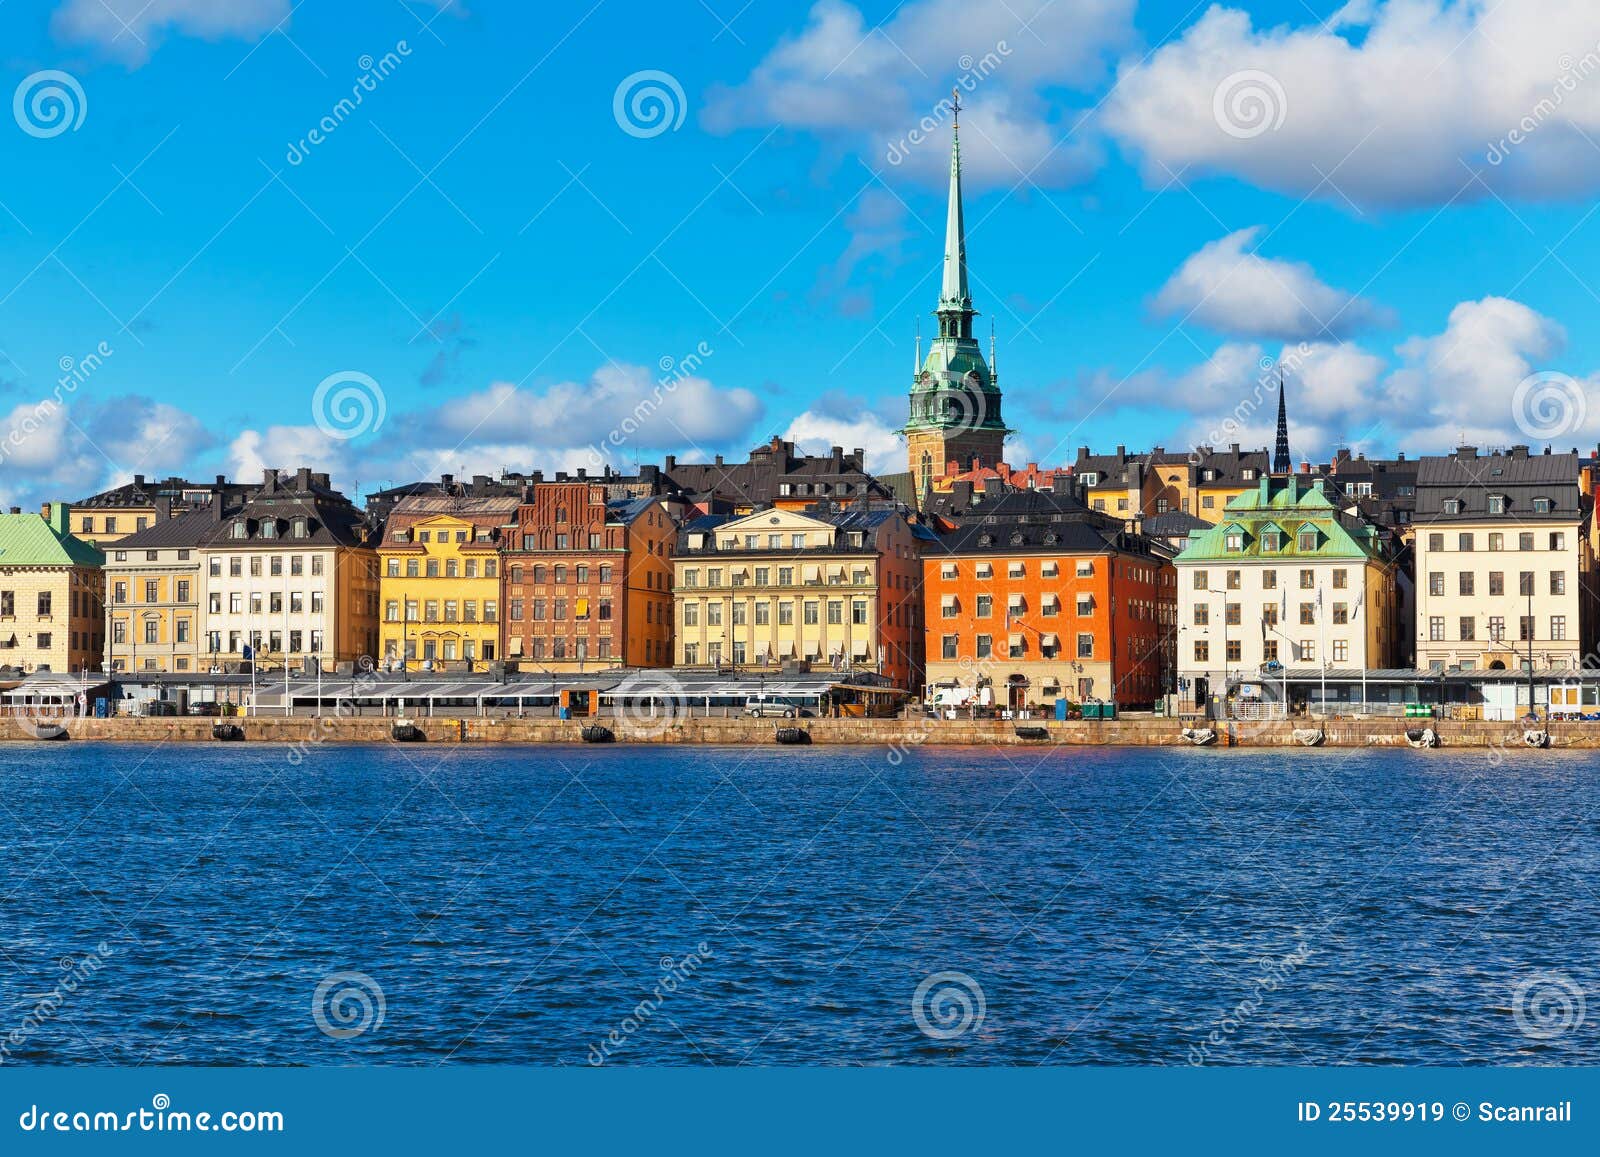 old town (gamla stan) in stockholm, sweden